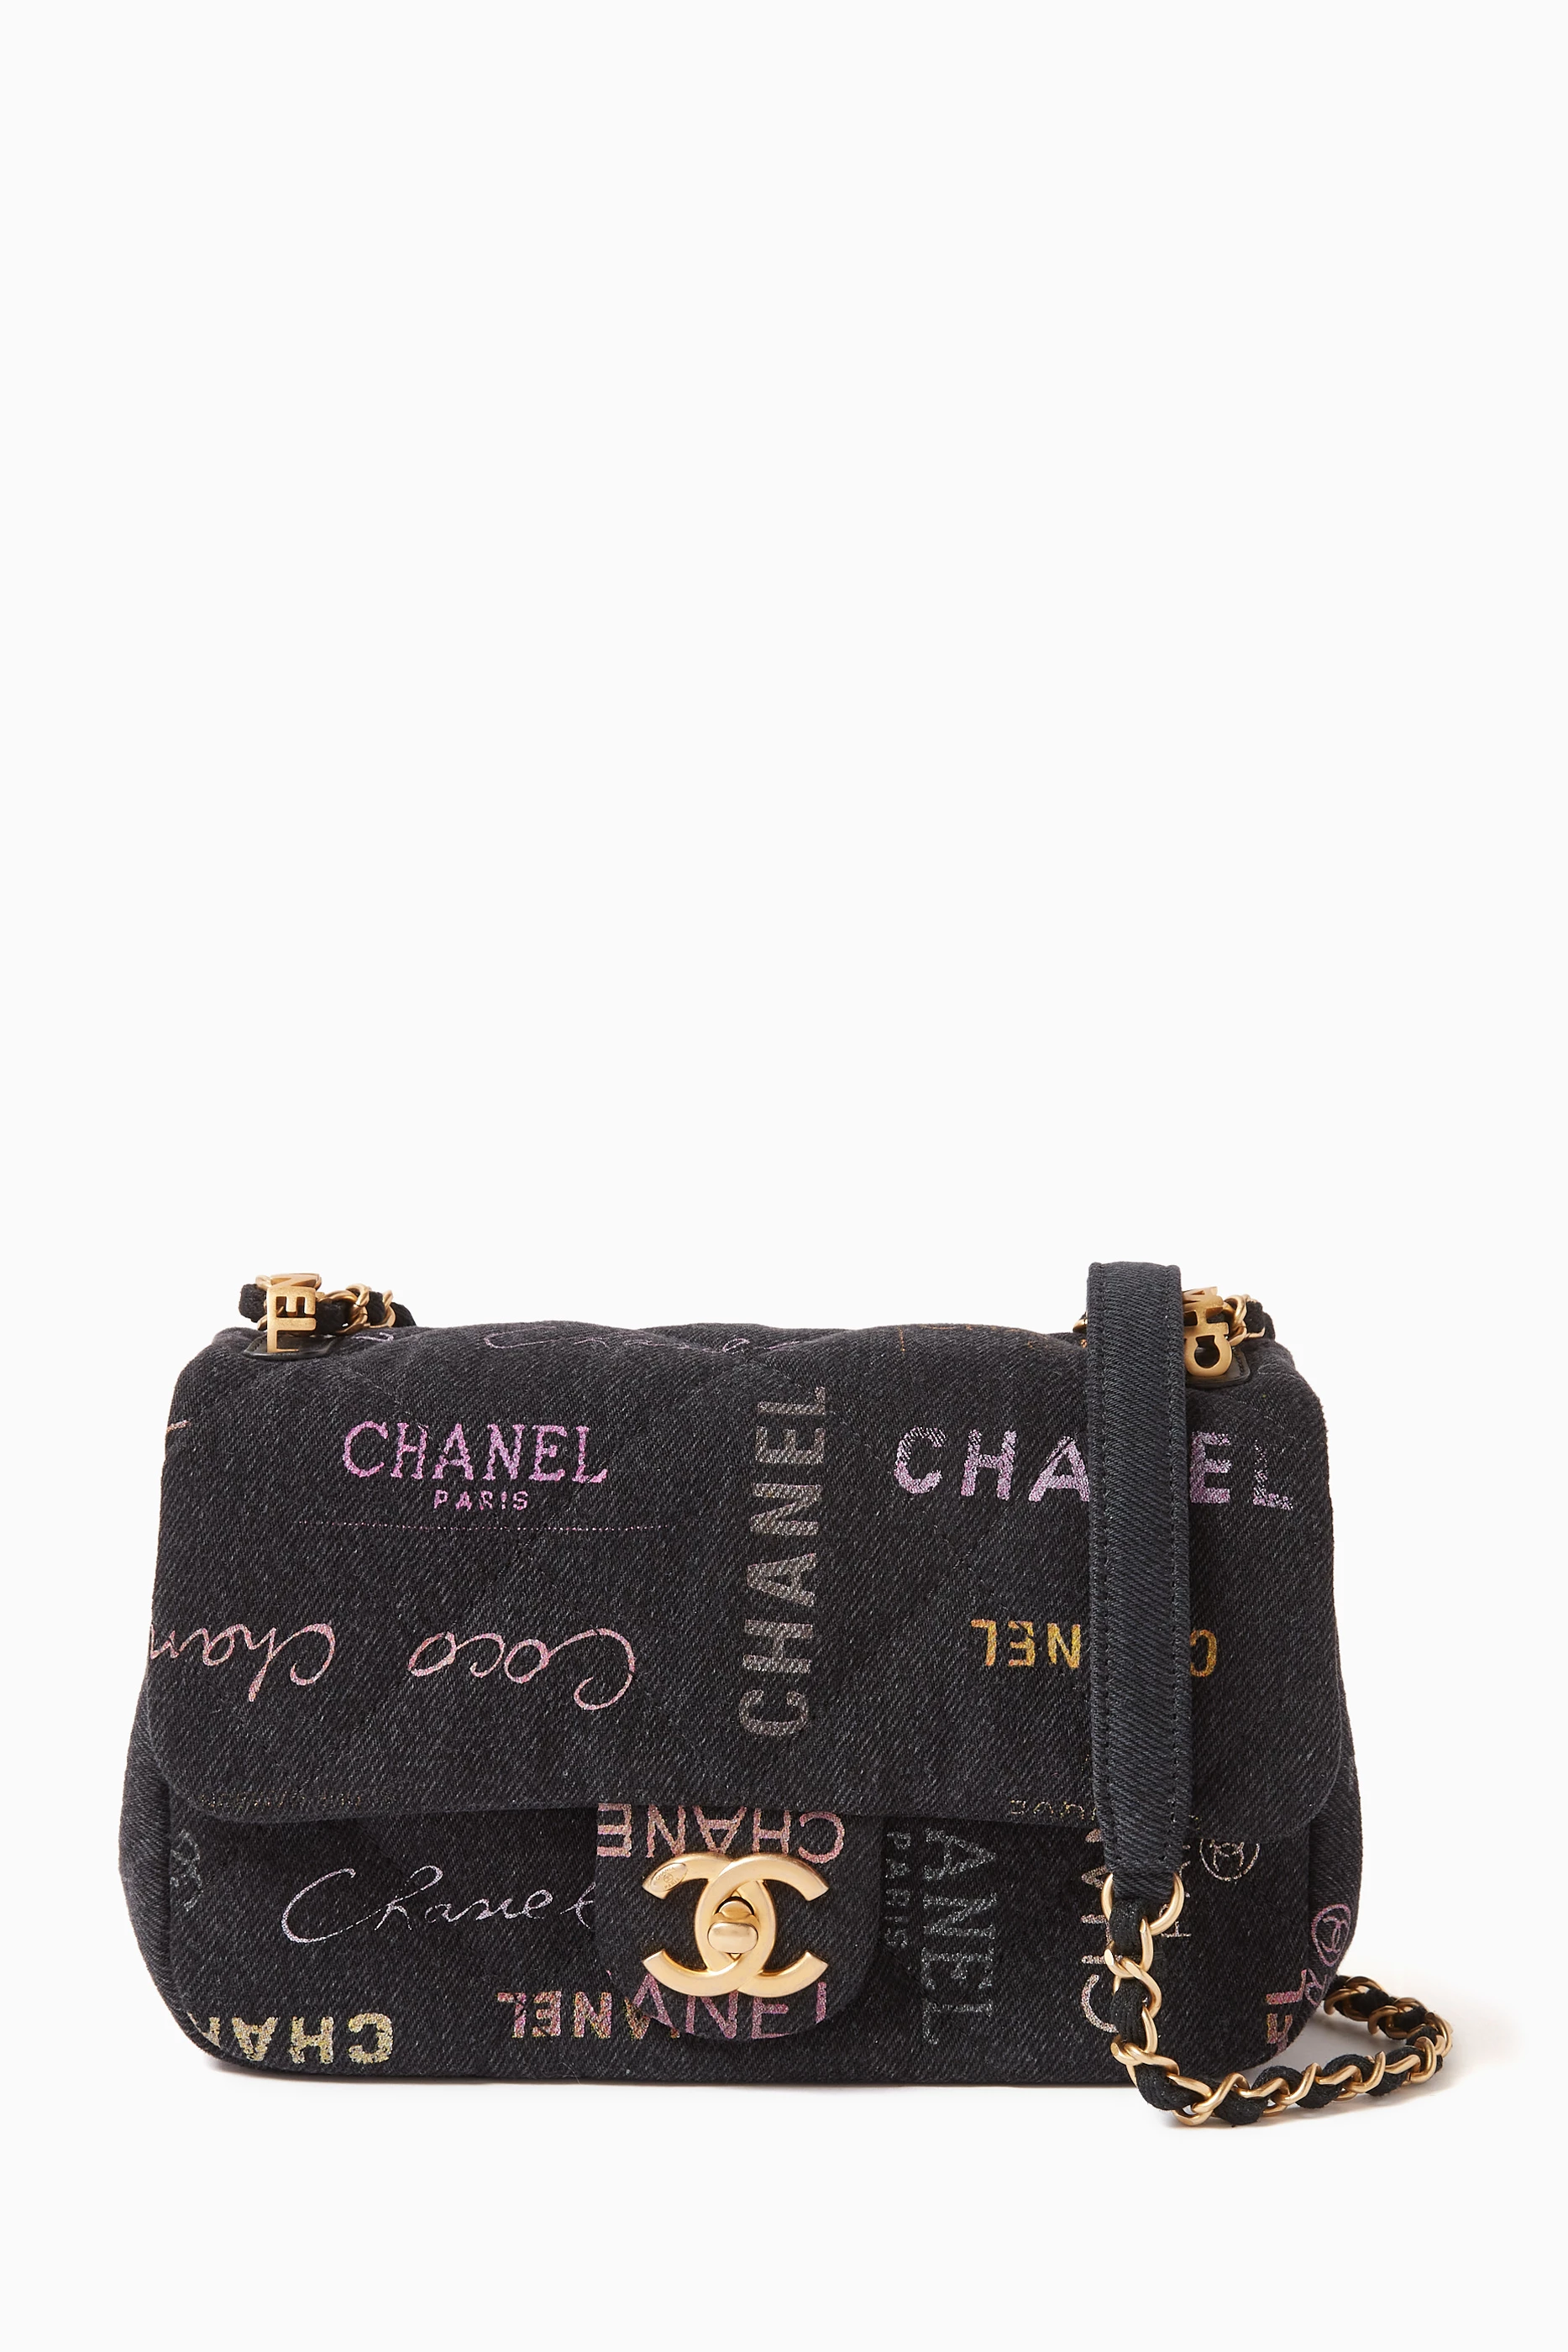 Chanel Paris-Dallas Flap Bag Denim and Shearling Medium Blue 4694871